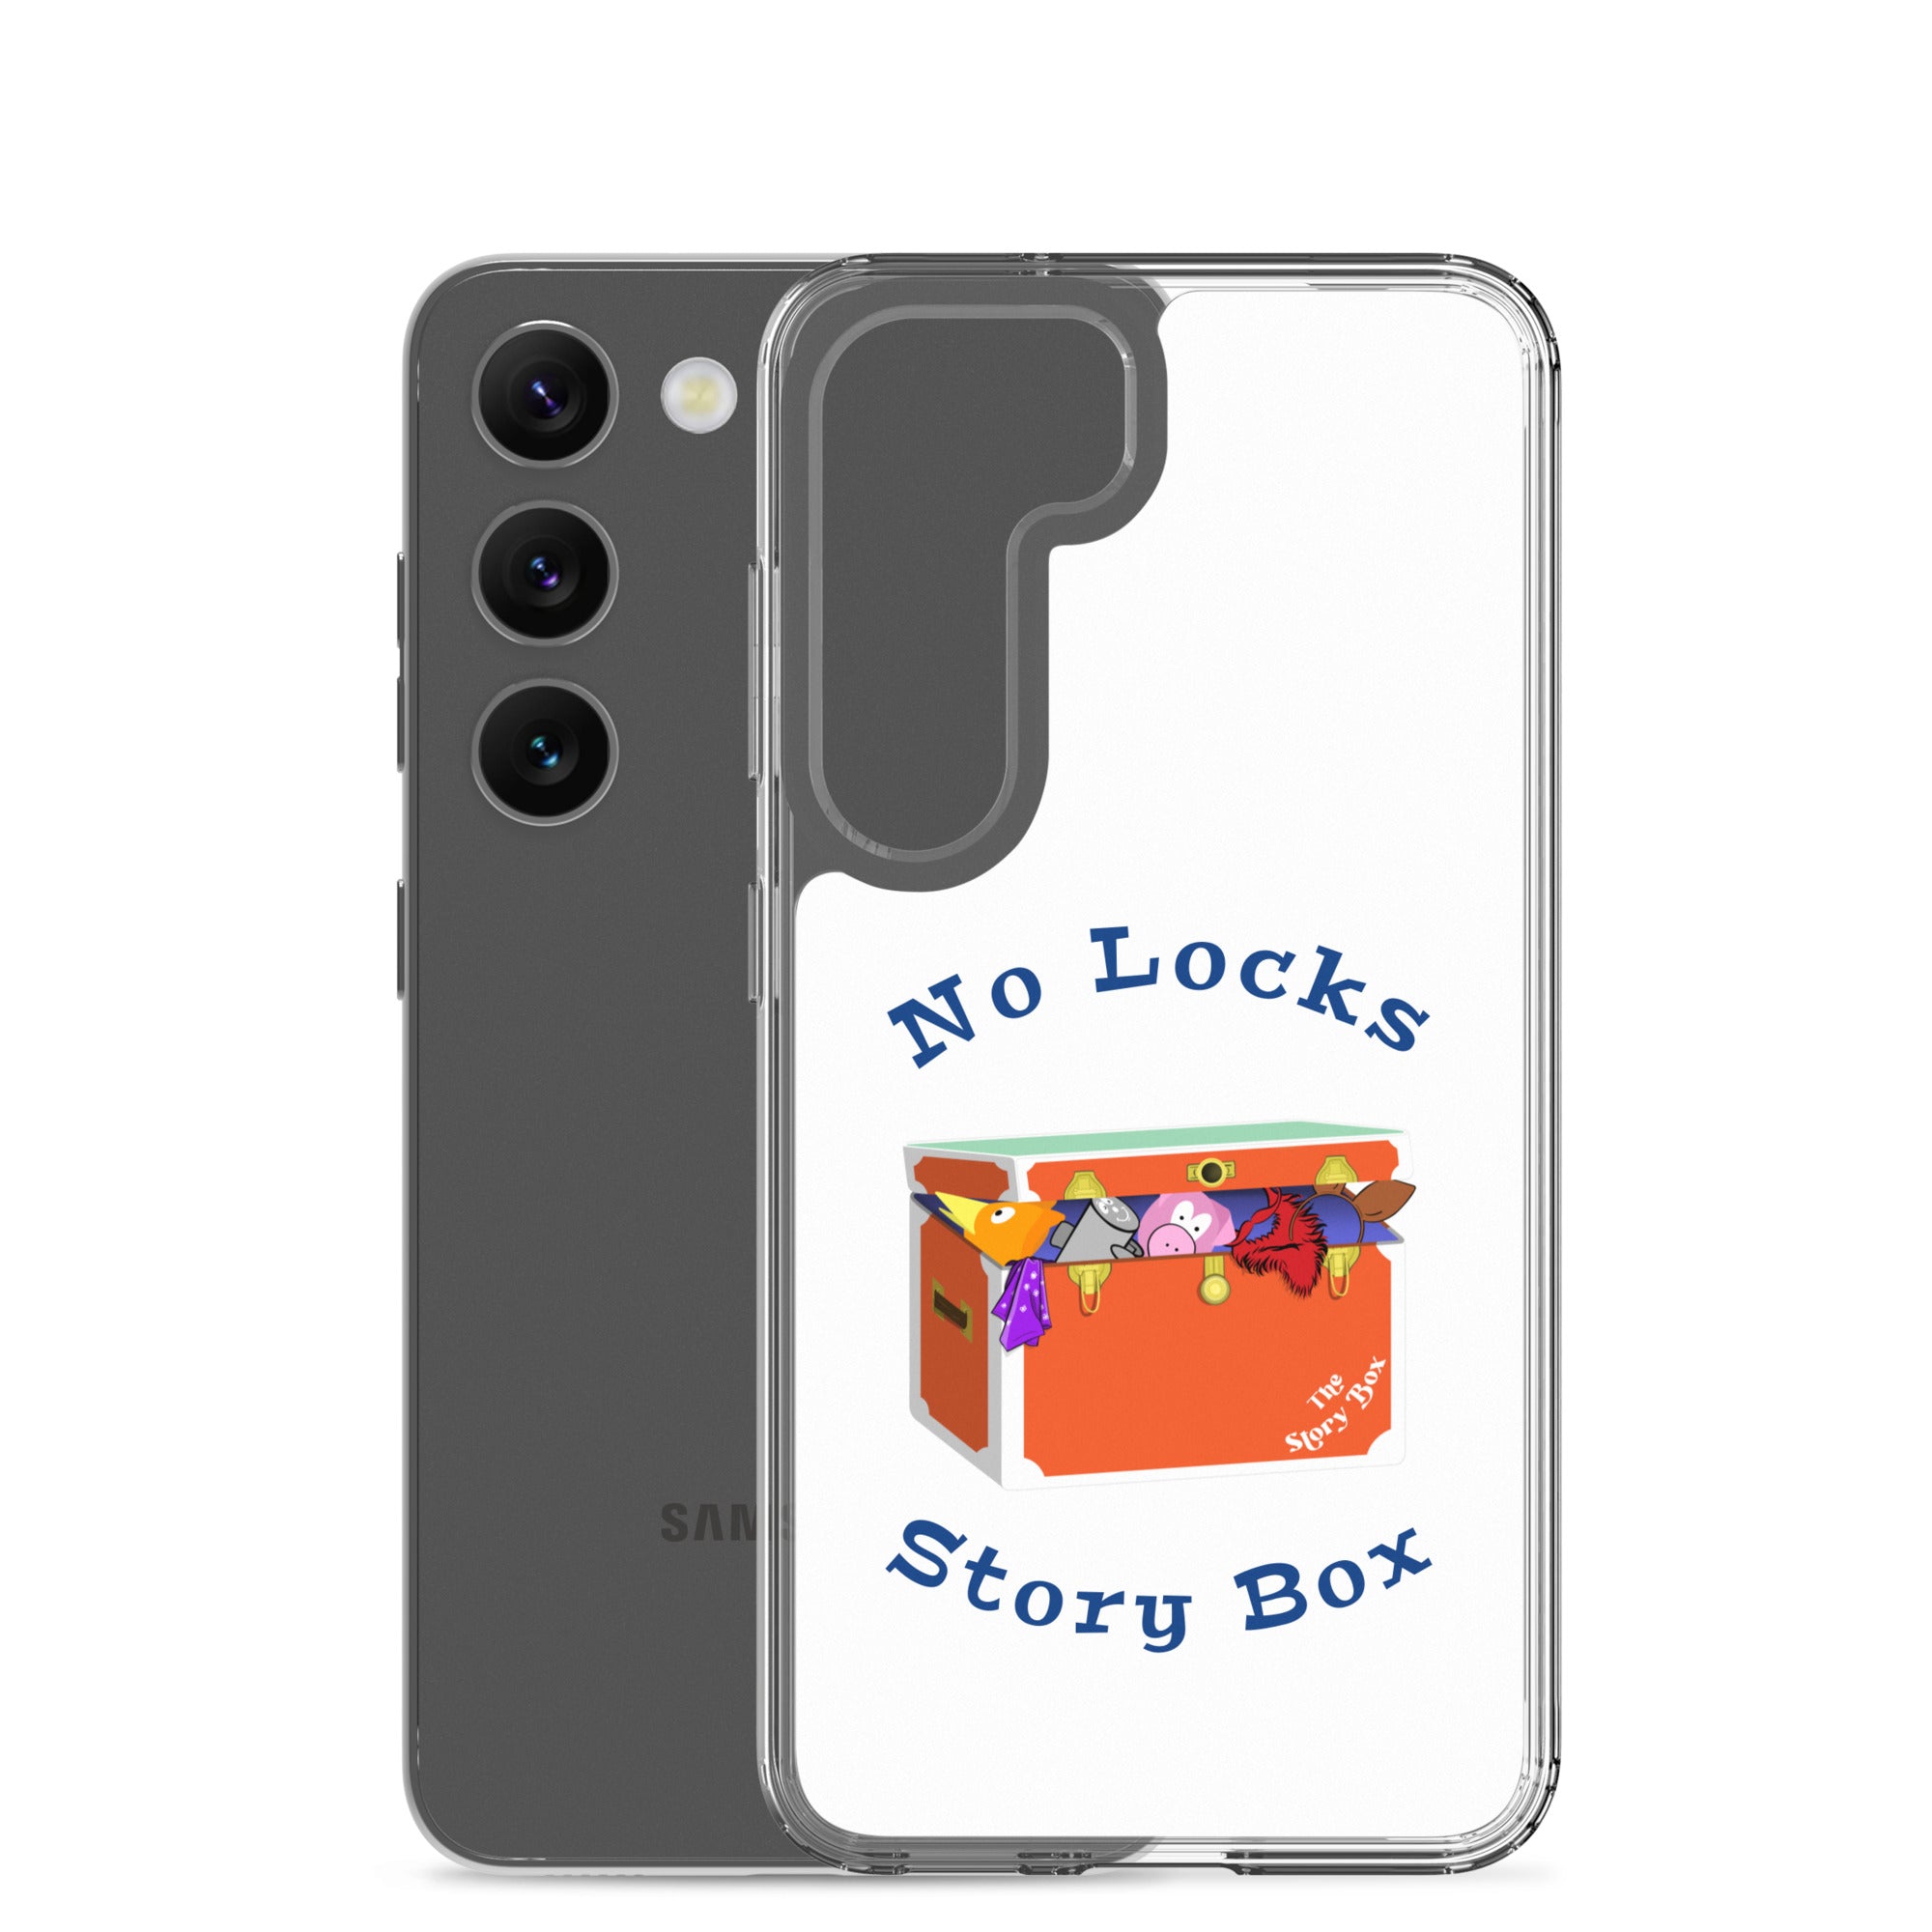 No Locks Story Box Samsung Phone Cover